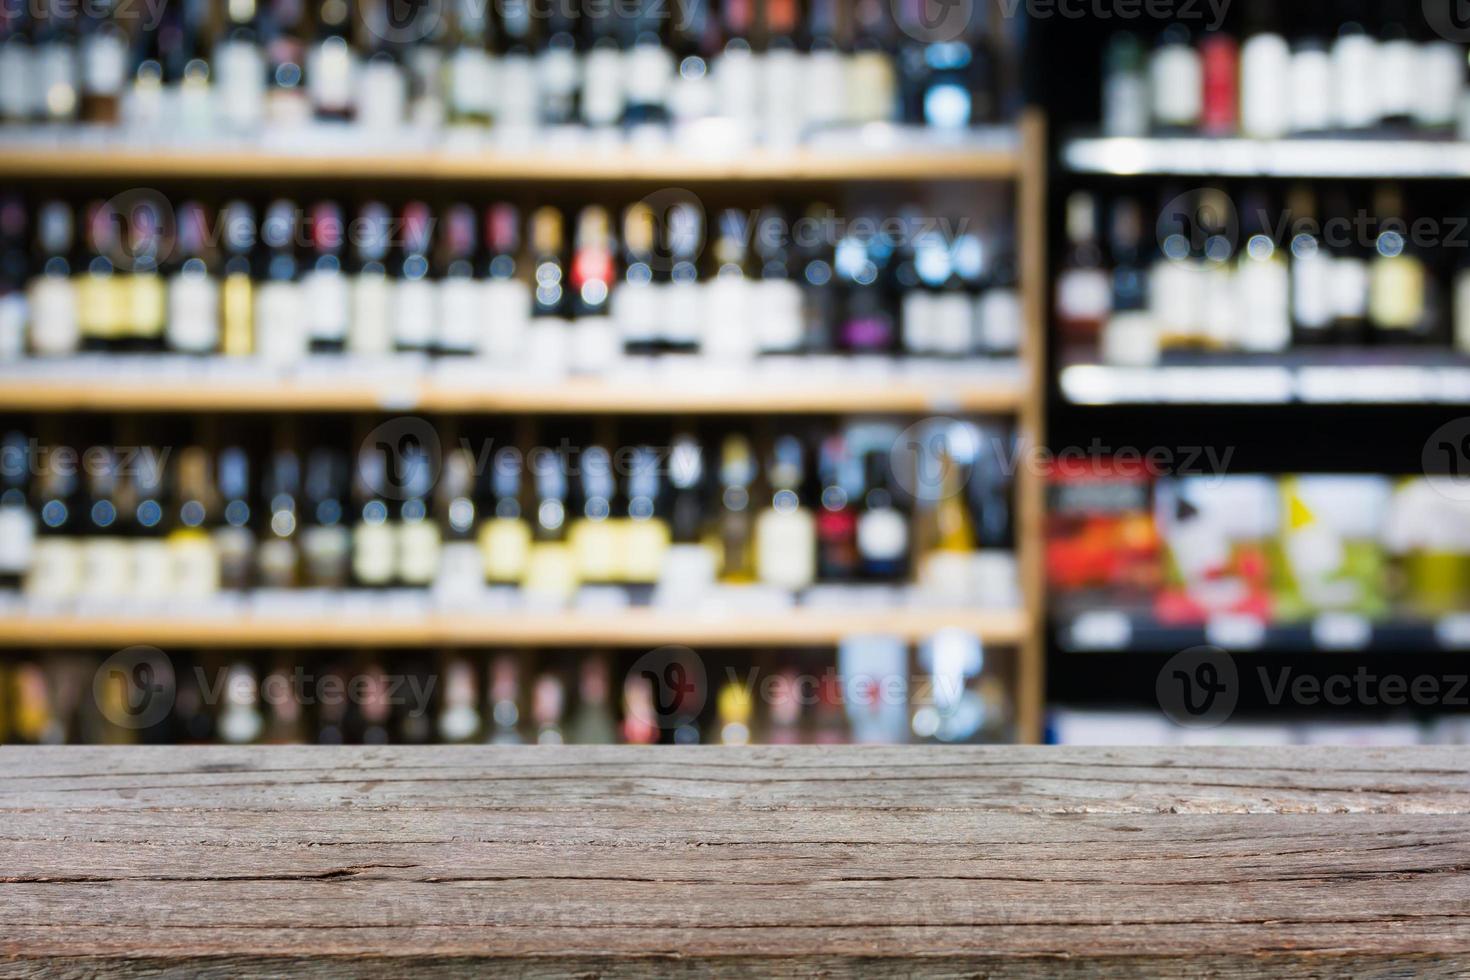 Abstract blur wine bottles on liquor alcohol shelves in supermarket background photo